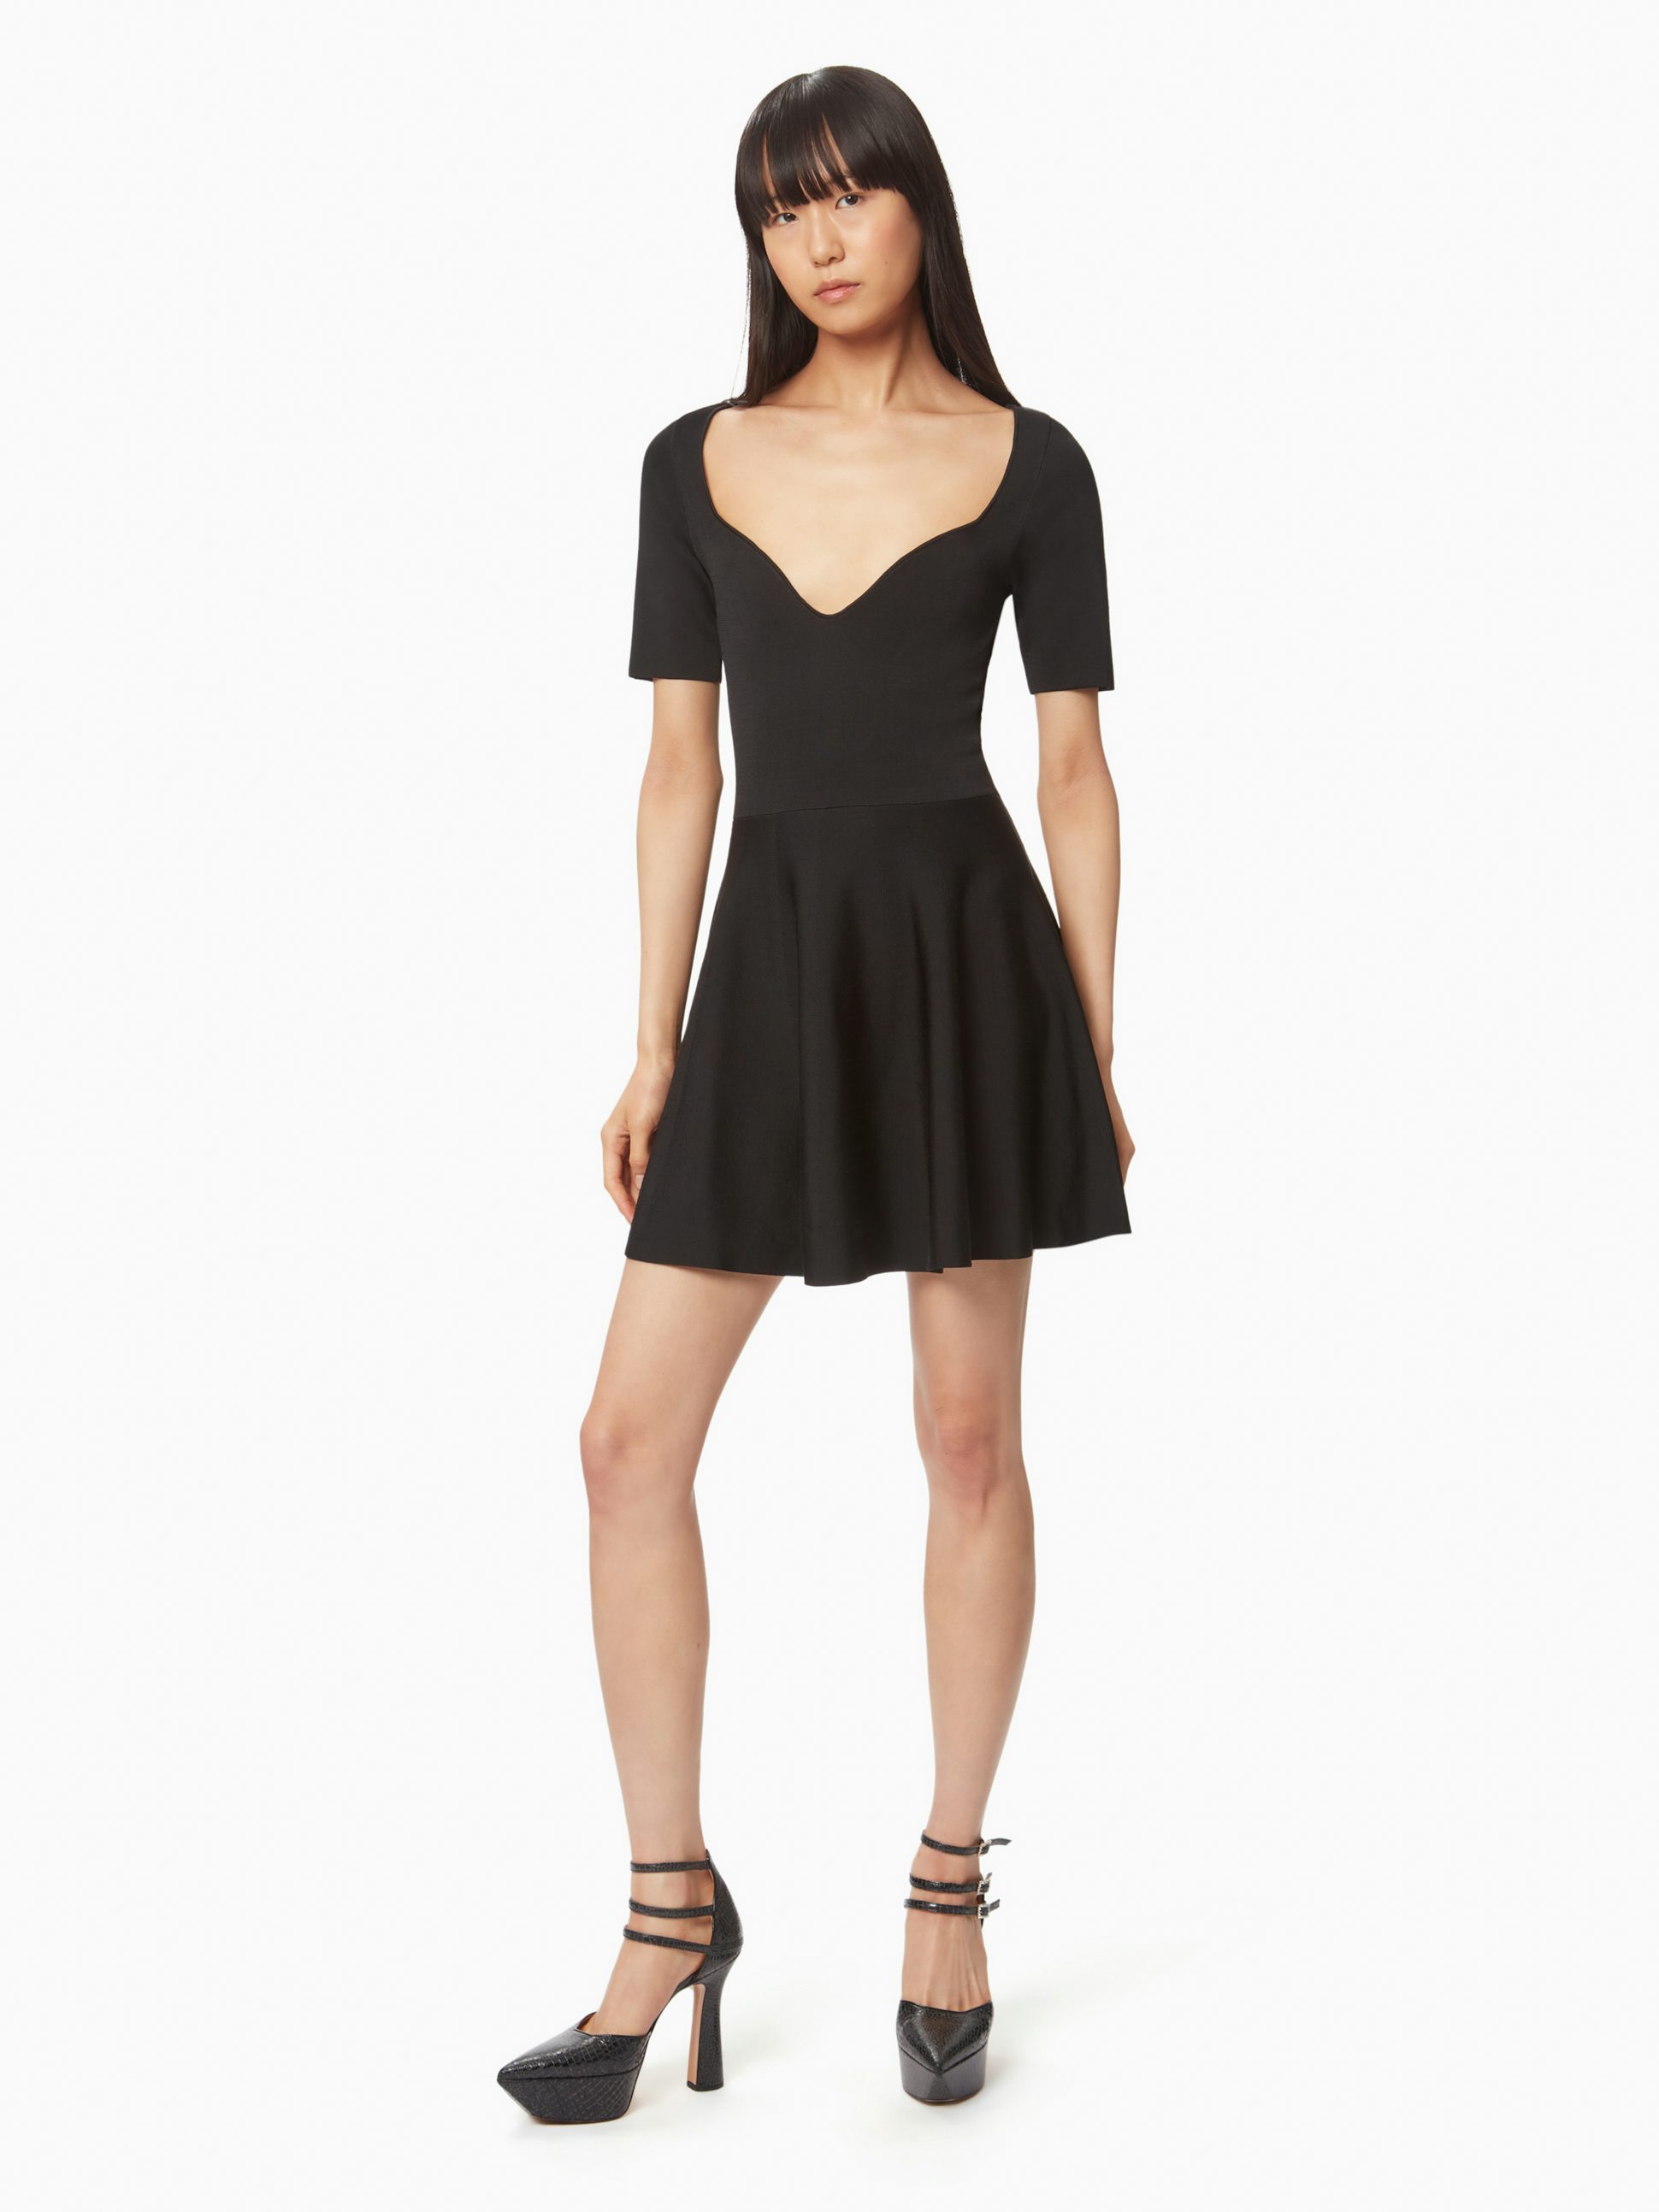 Heart neckline flared dress in black - Nina Ricci